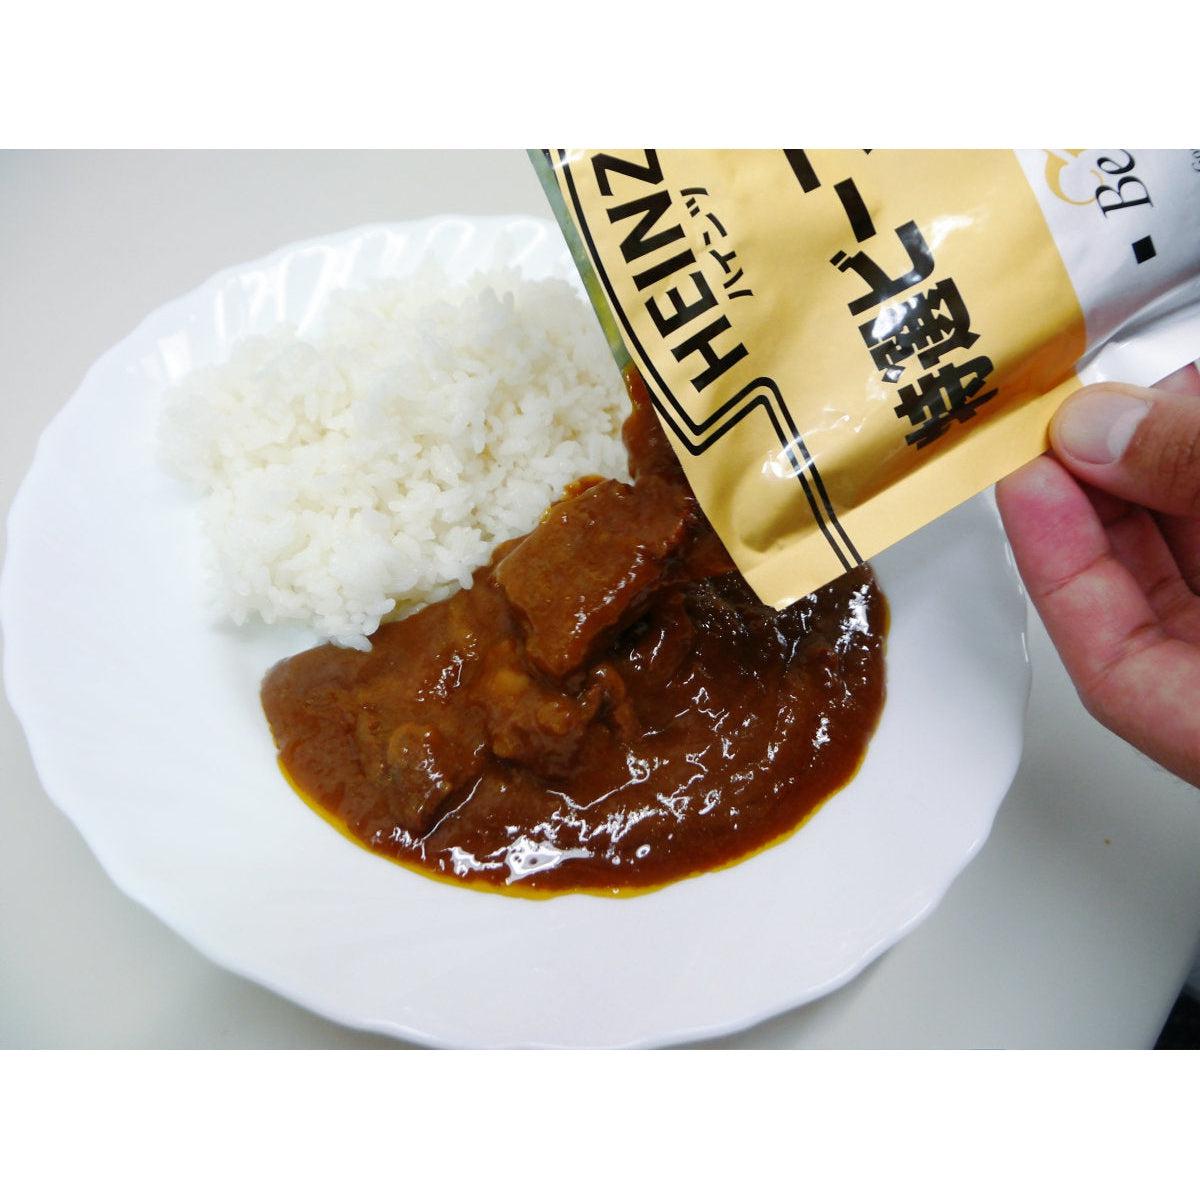 Buy Taste Japanese Katsu Curry Kit 280g